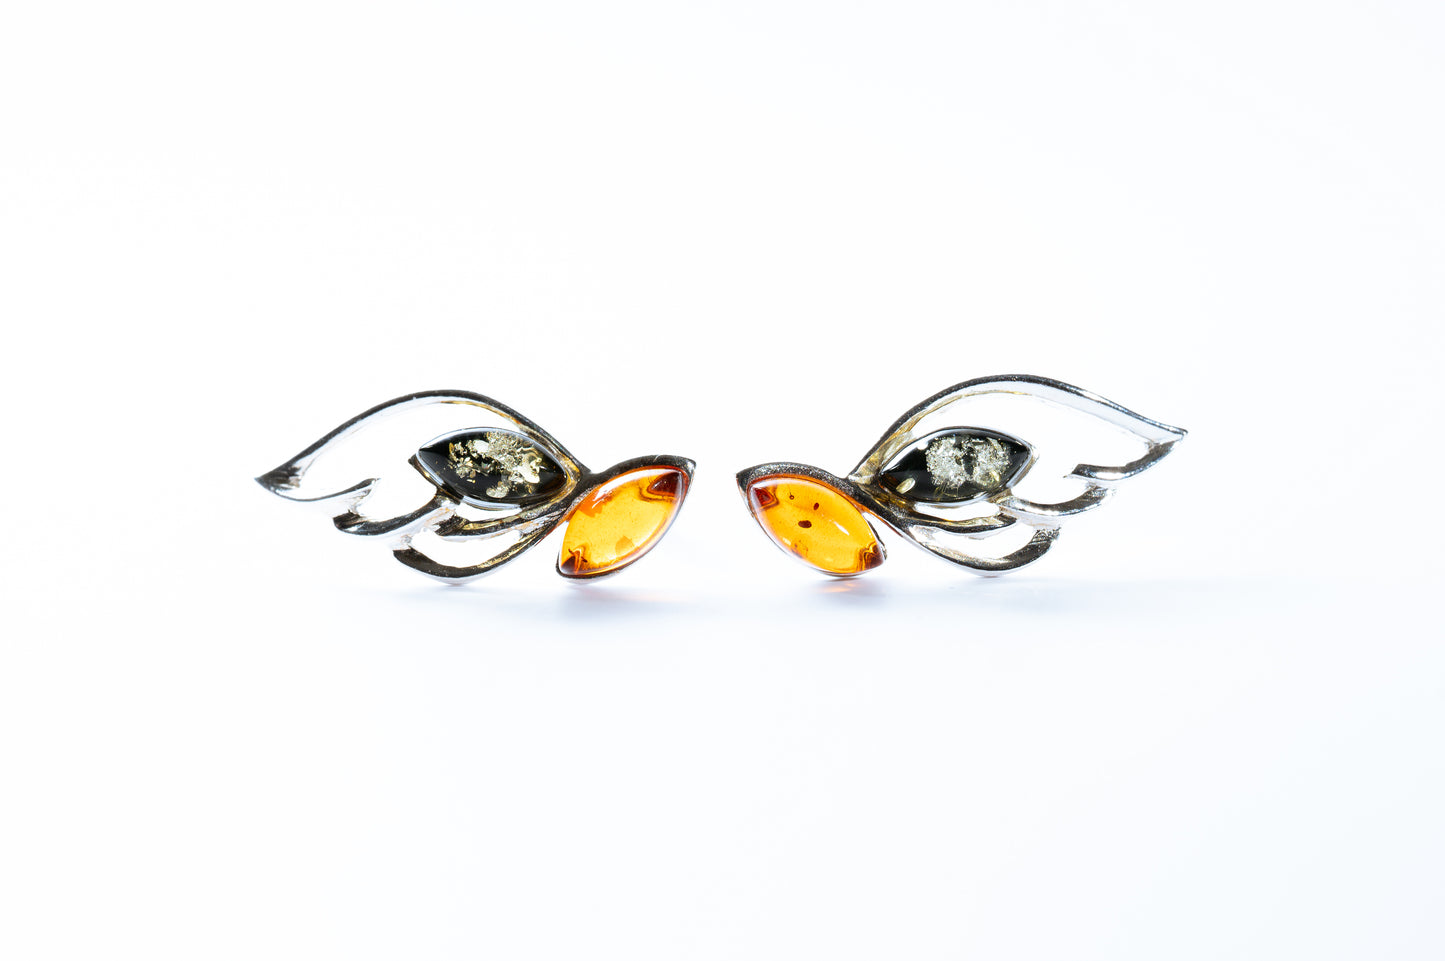 Two-Tone Baltic Amber Wing Stud Earrings